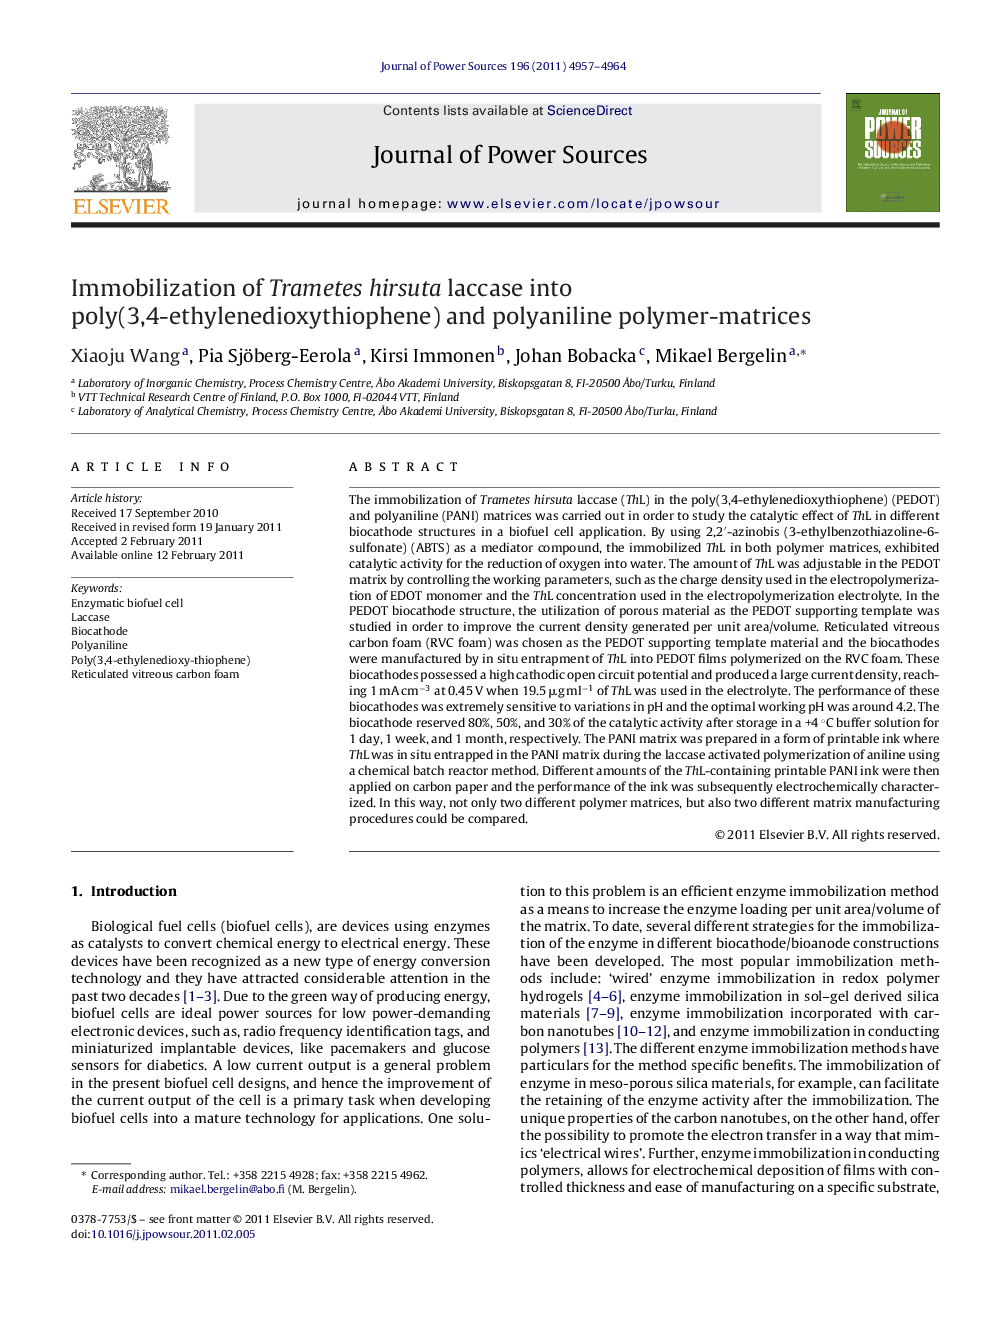 Immobilization of Trametes hirsuta laccase into poly(3,4-ethylenedioxythiophene) and polyaniline polymer-matrices